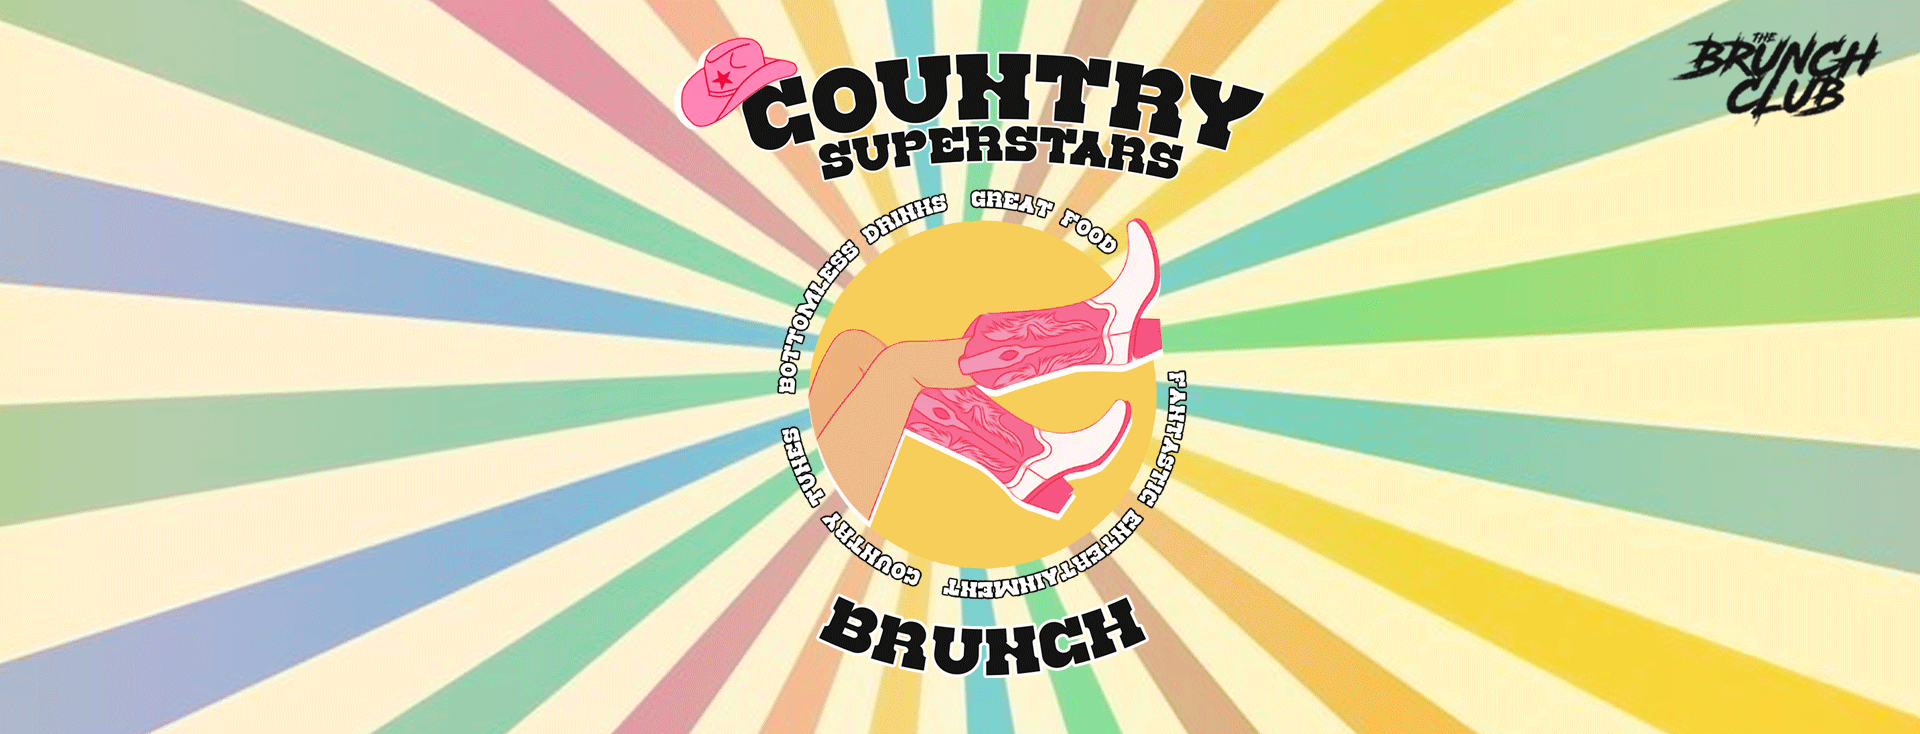 Country Superstars Bottomless Brunch - Birmingham